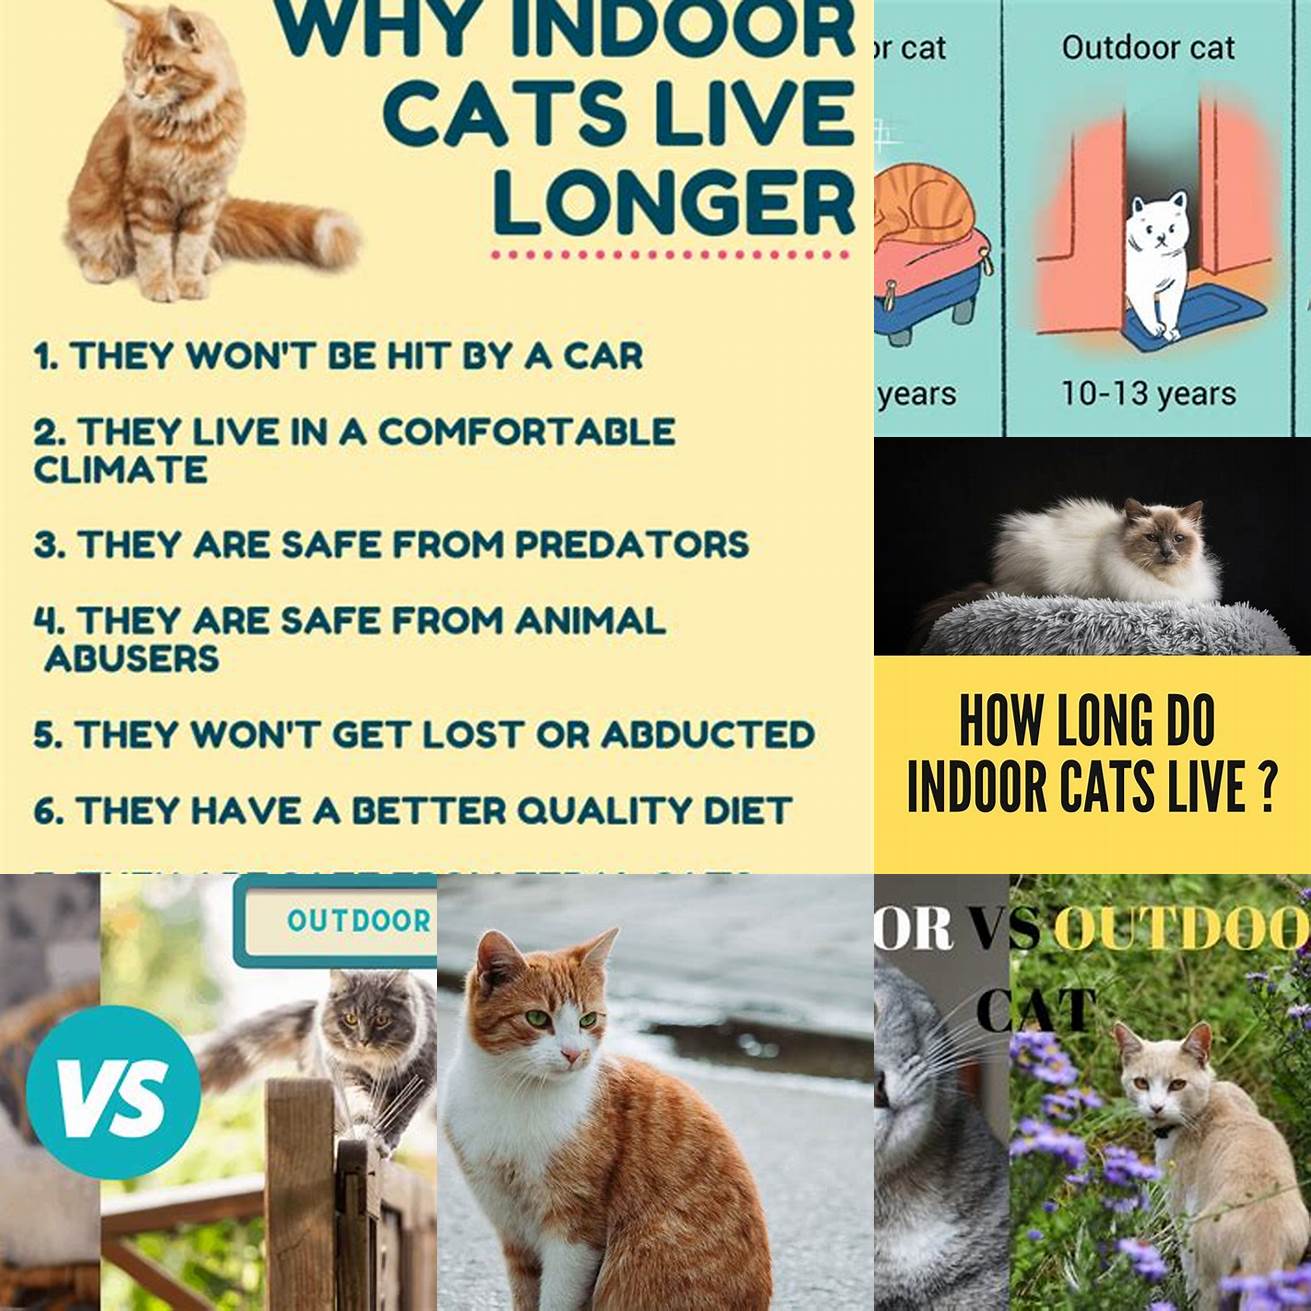 Q Do outdoor cats live longer than indoor cats